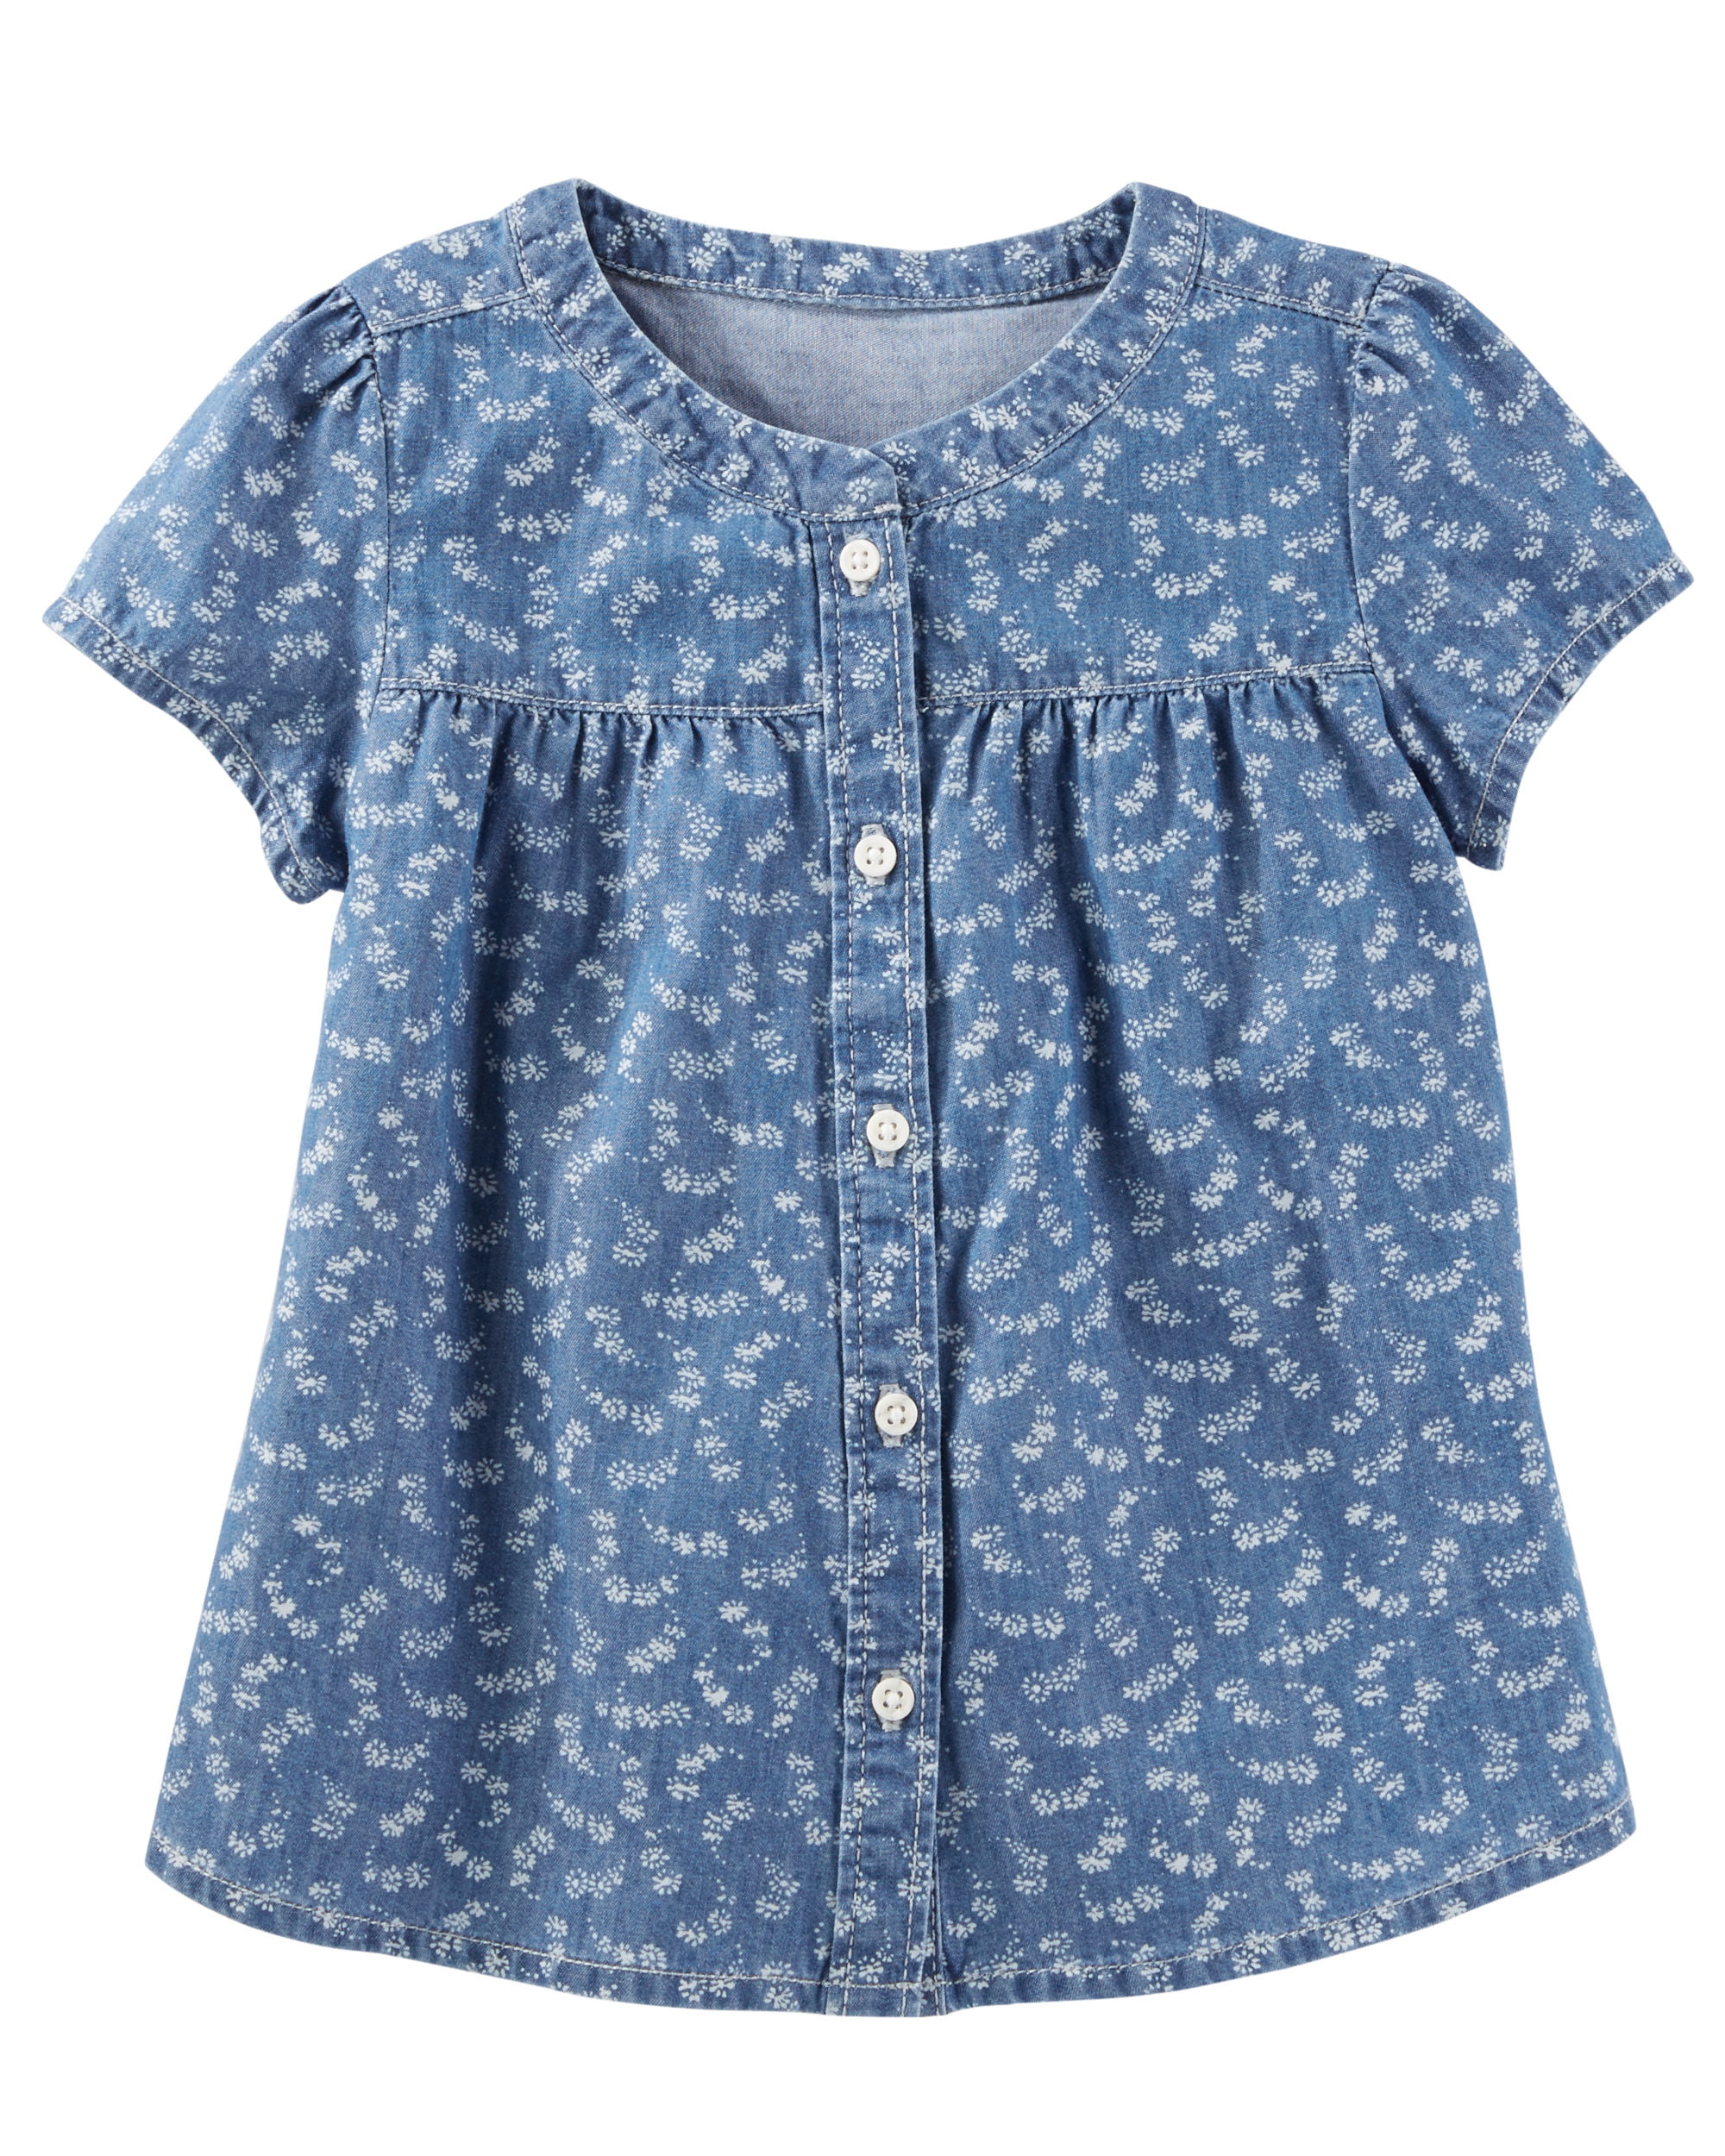 OshKosh B'Gosh Infant Girls' Chambray Ruffle Top NWT long sleeve shirt blouse 